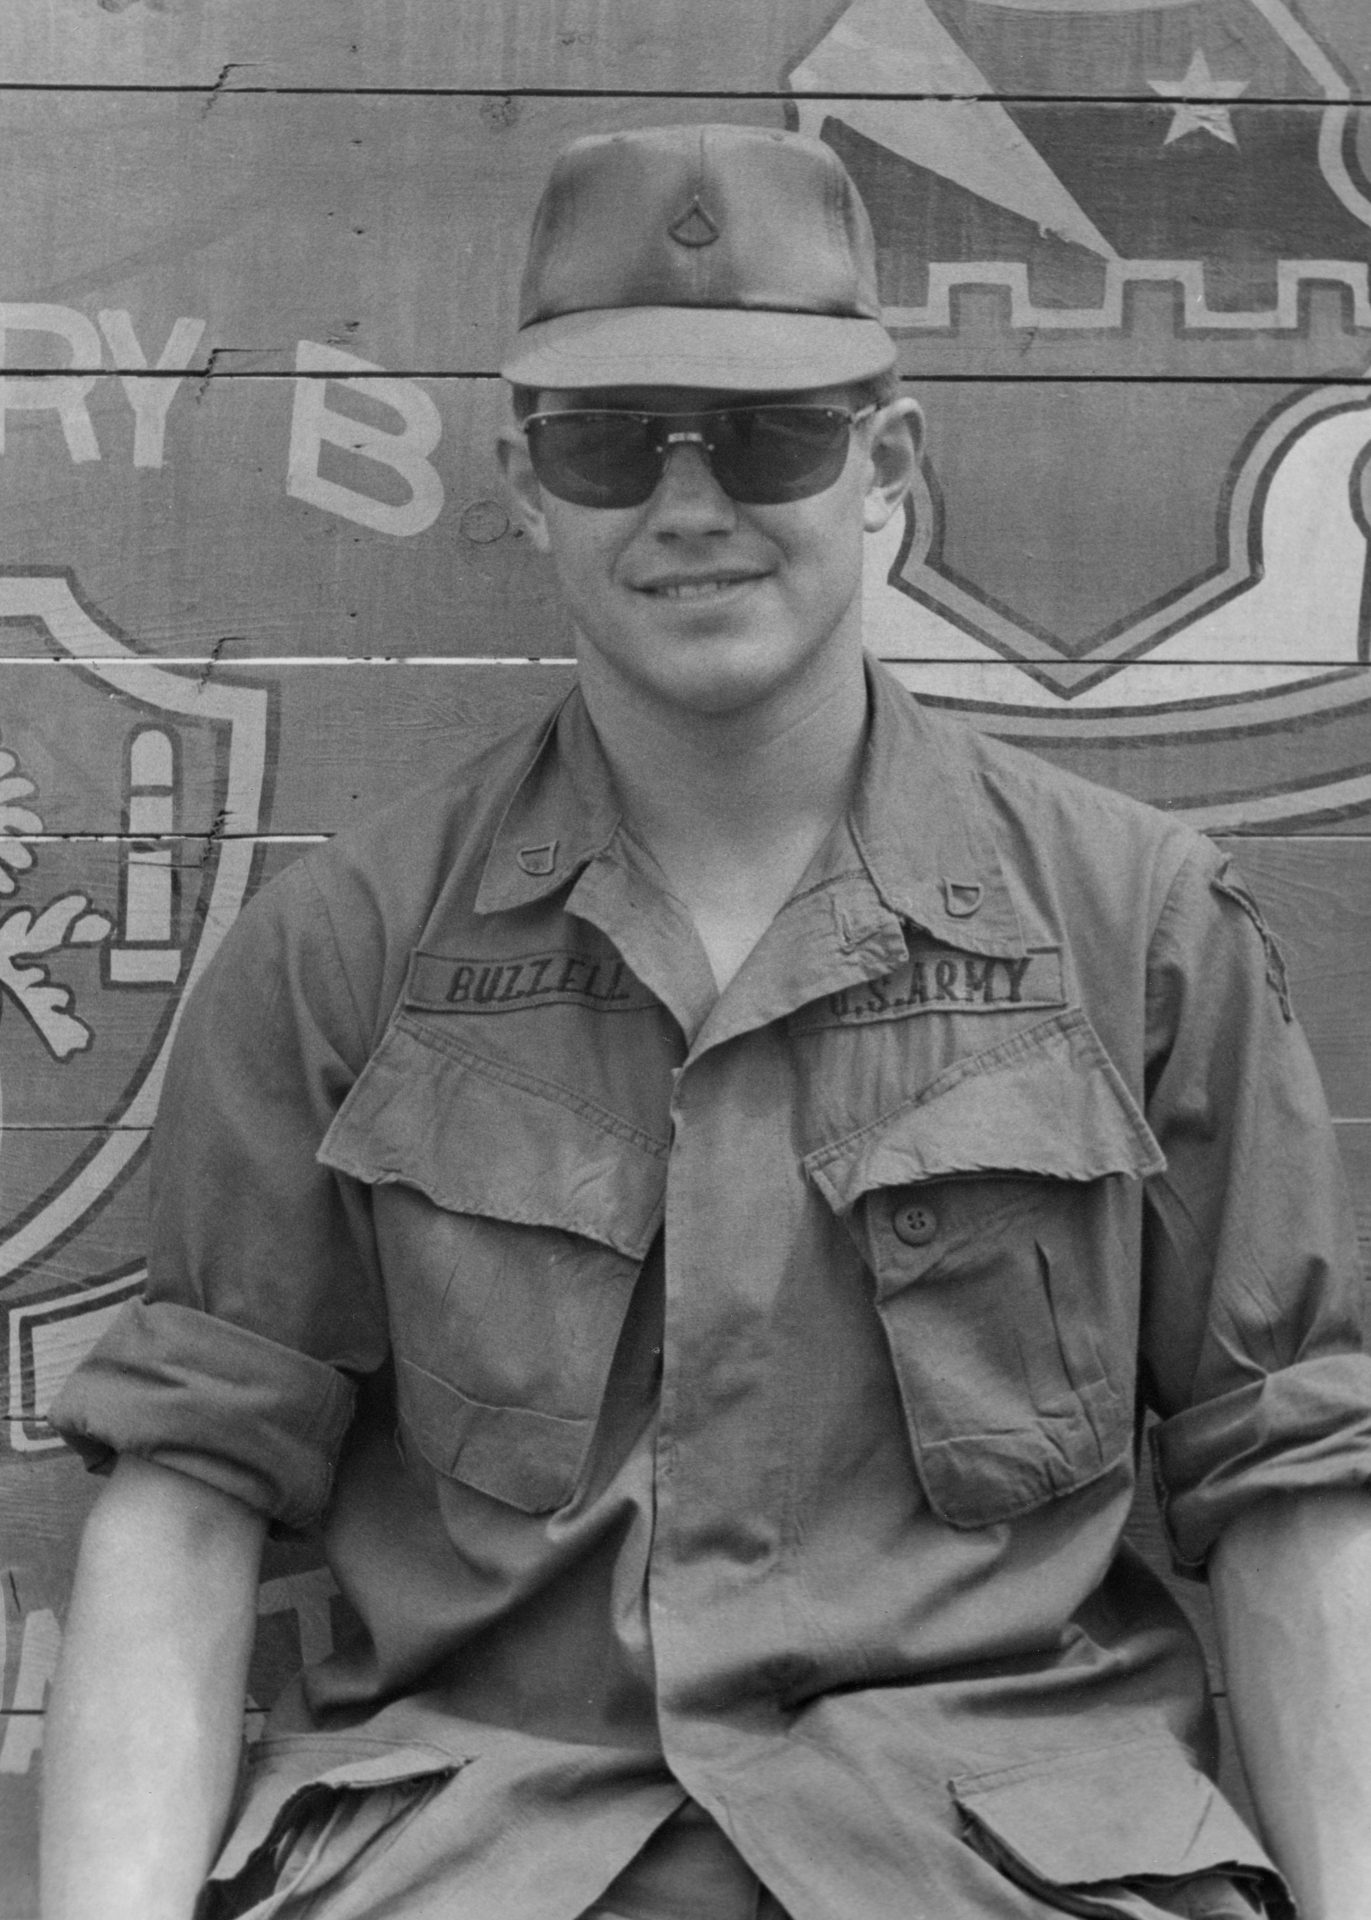 Greg Buzzell Vietnam Veterans of Wisconsin